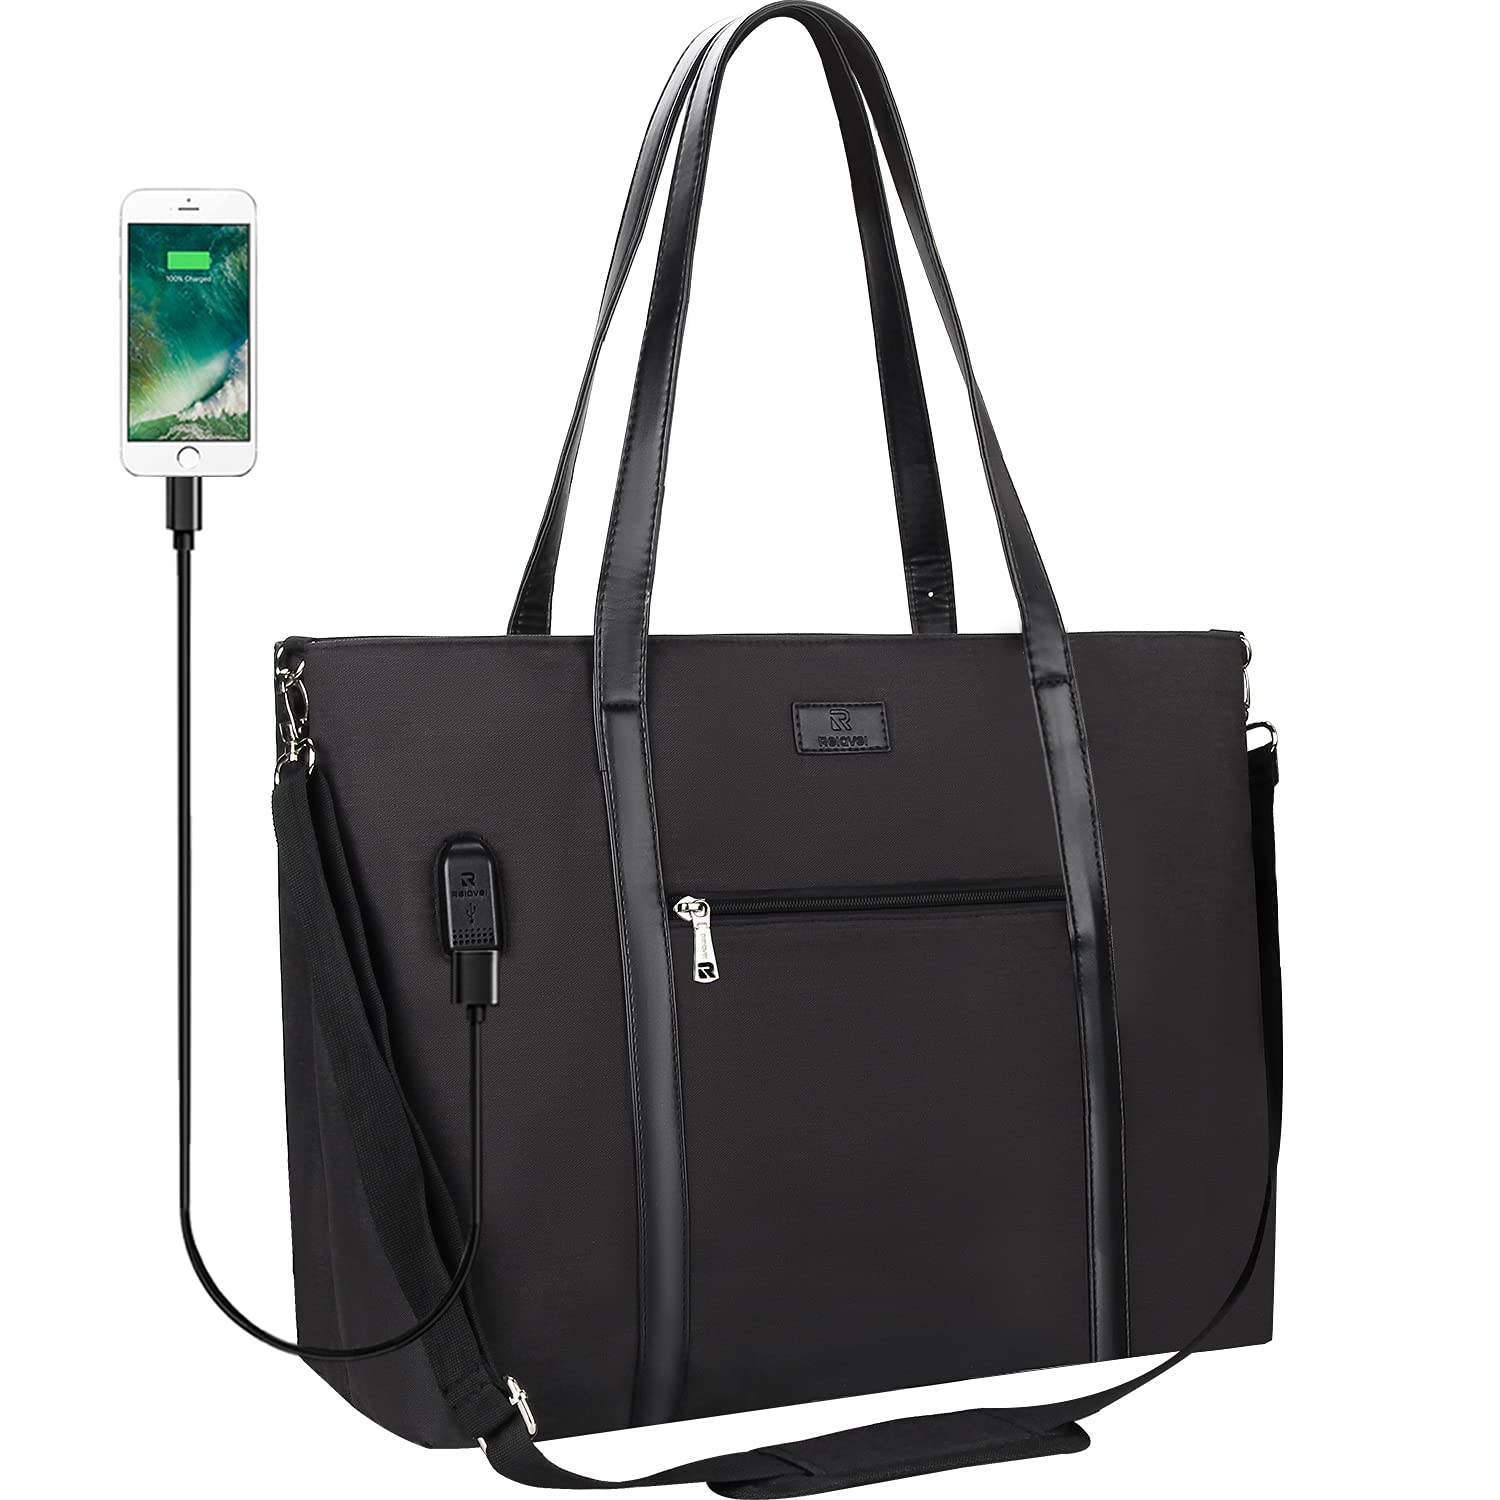 Laptop tote bag for women – Large Capacity Practical Bags